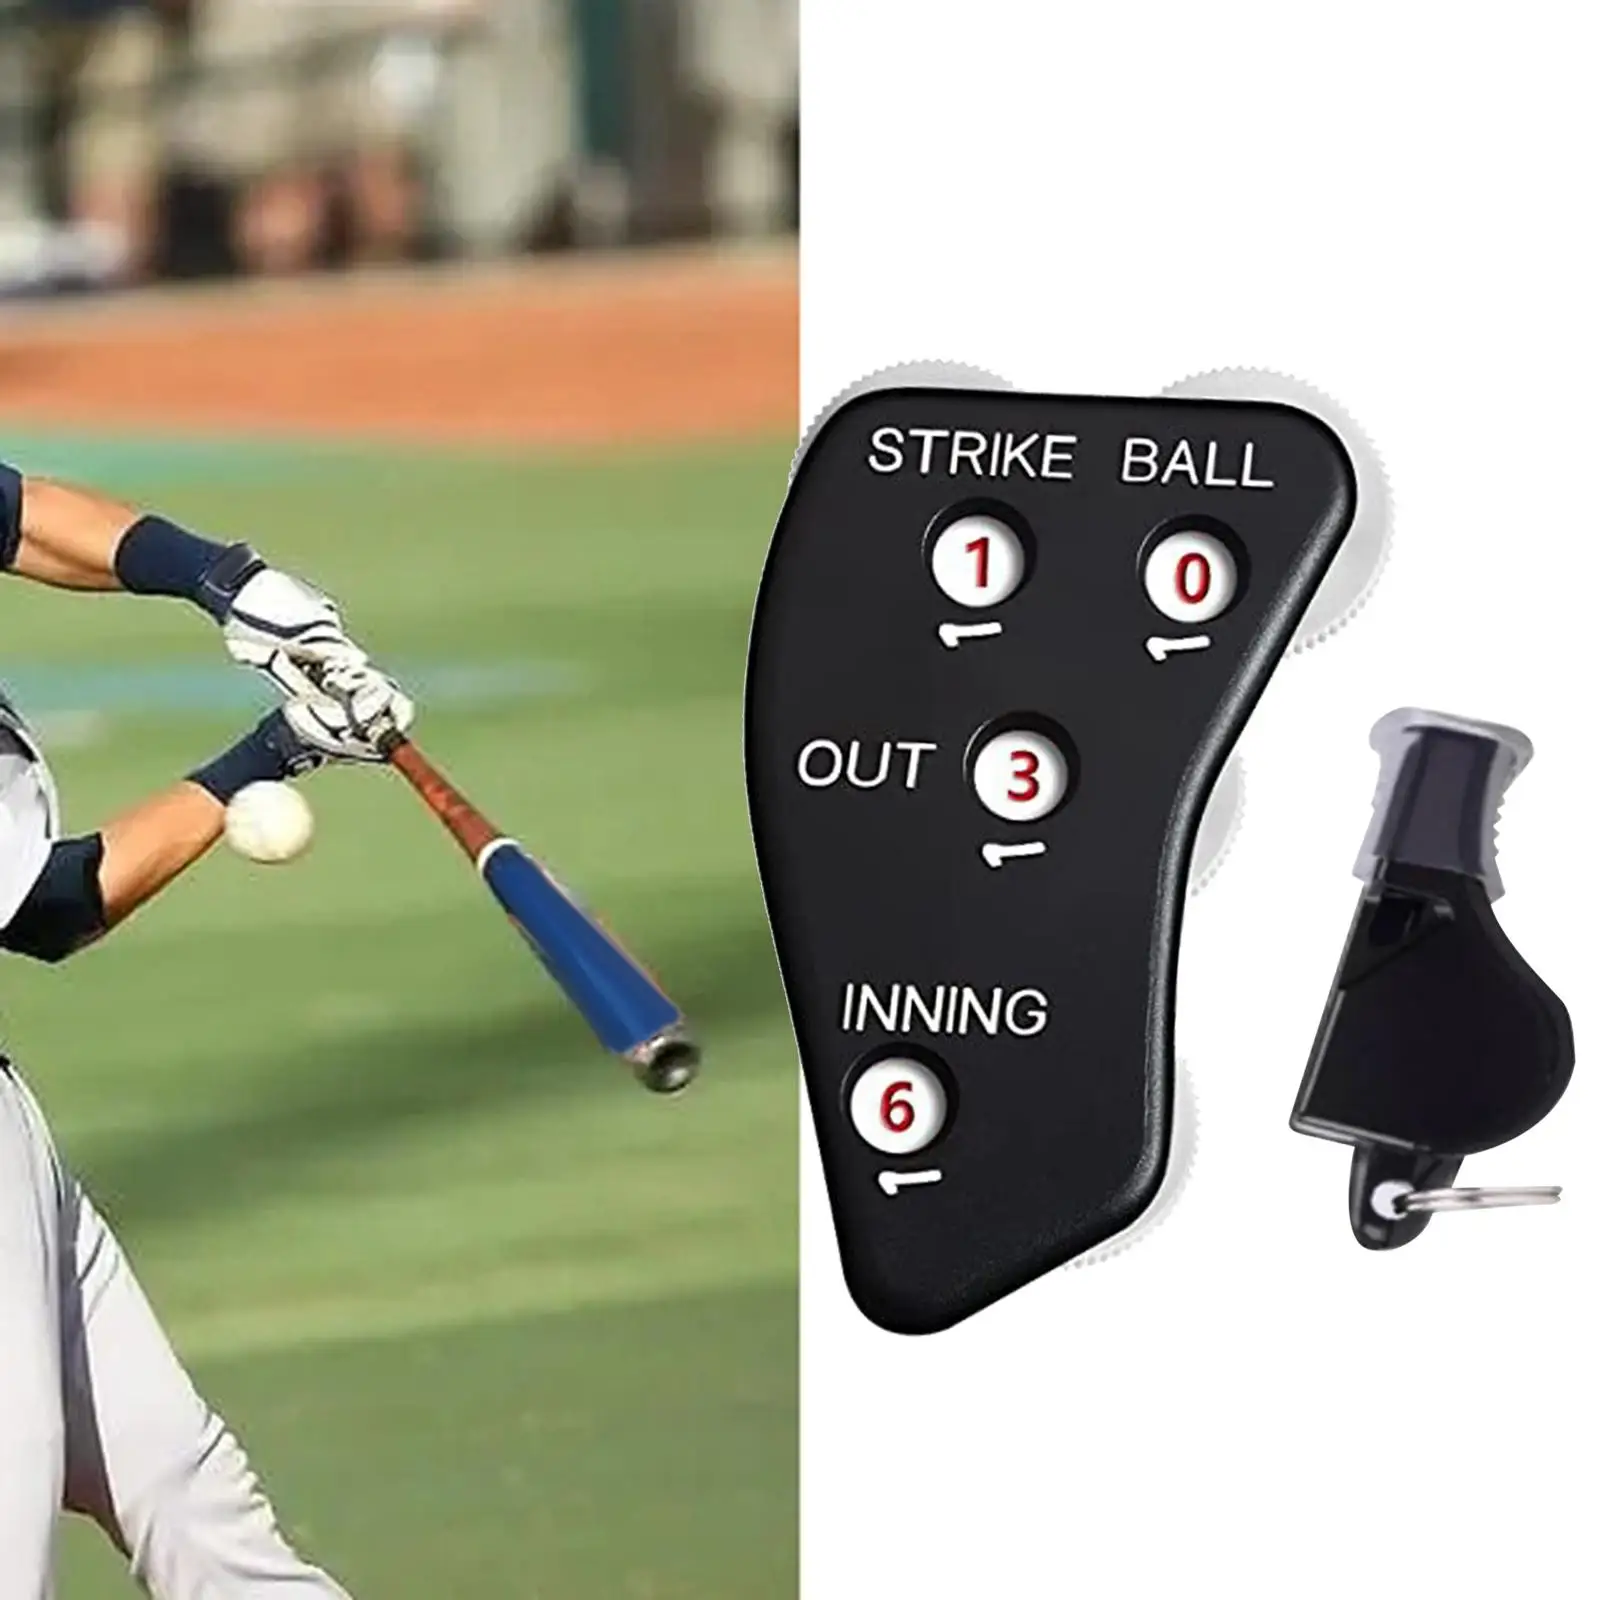 4 Wheel Baseball Umpire Accessories Ball Strike Outs Supplies Score Counter Baseball Umpire Gear Indicator Innings